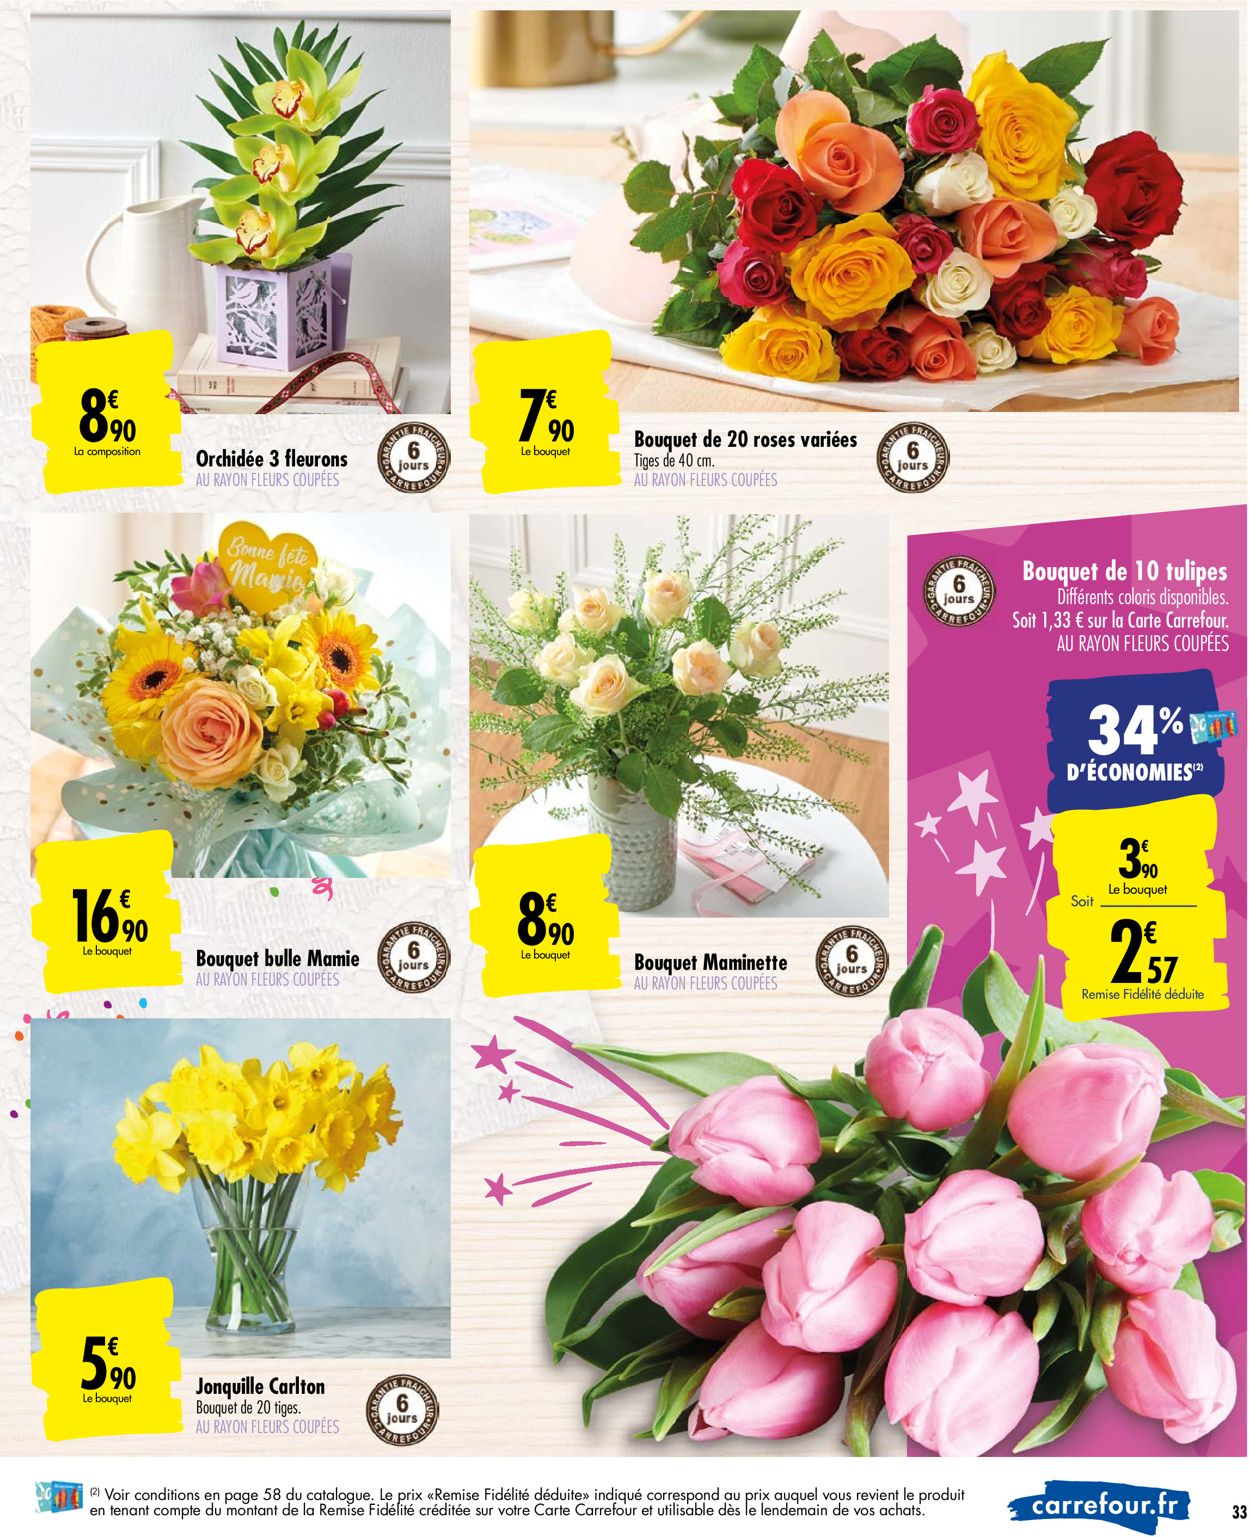 Carrefour Catalogue actuel 25.02 - 09.03.2020 [36]